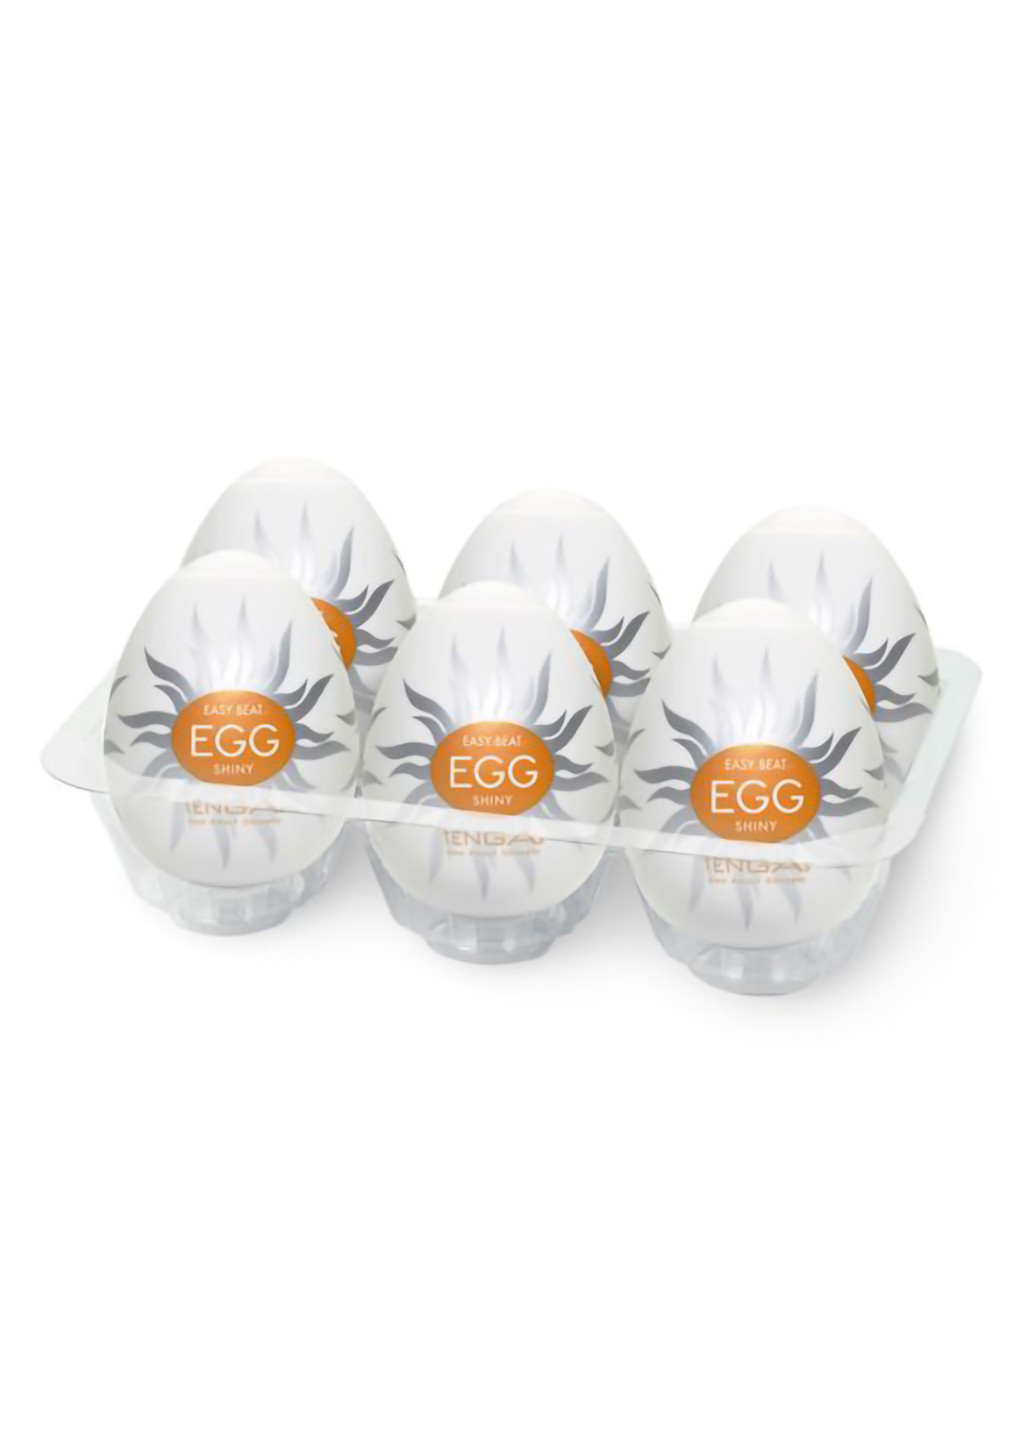 Мастурбатор яйцо Egg Shiny (Cолнечный) Tenga (254151543)